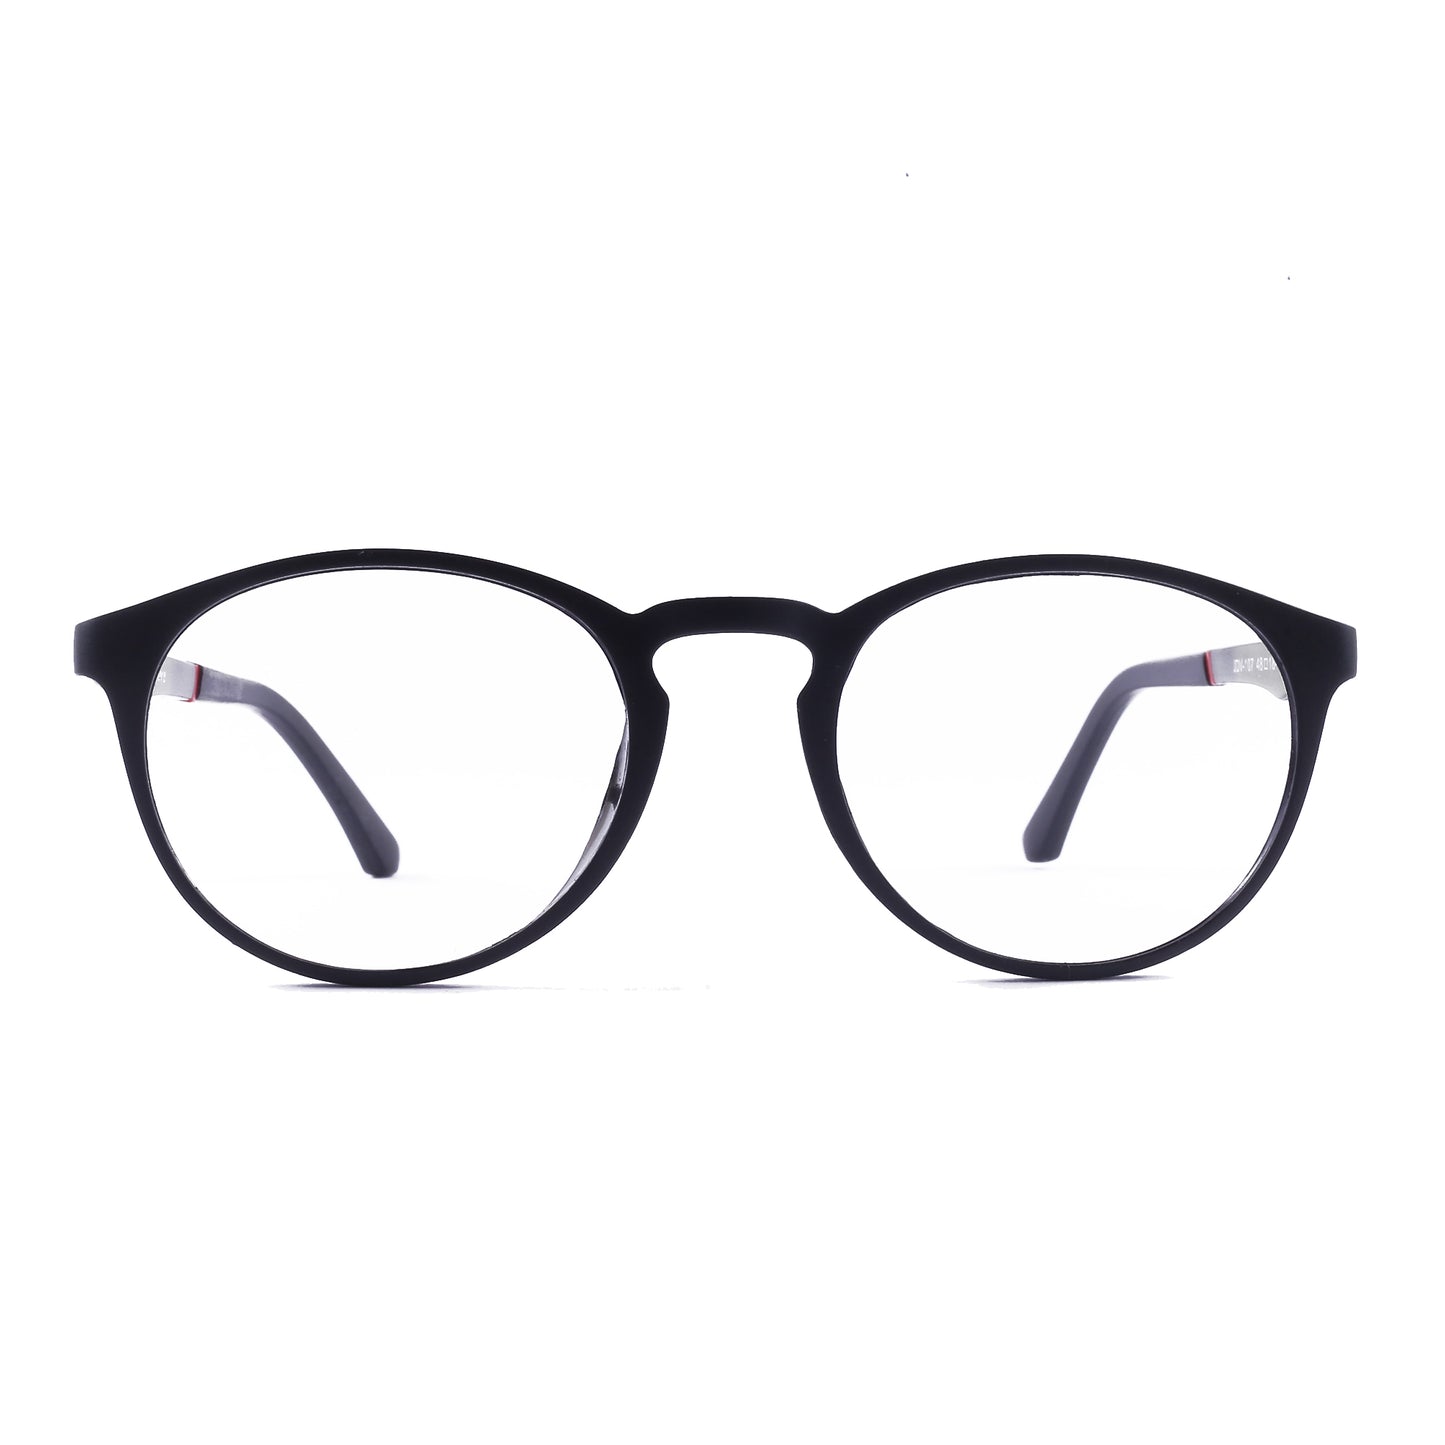 Loscomun Computer Glasses Matte Black Round Eyeglasses